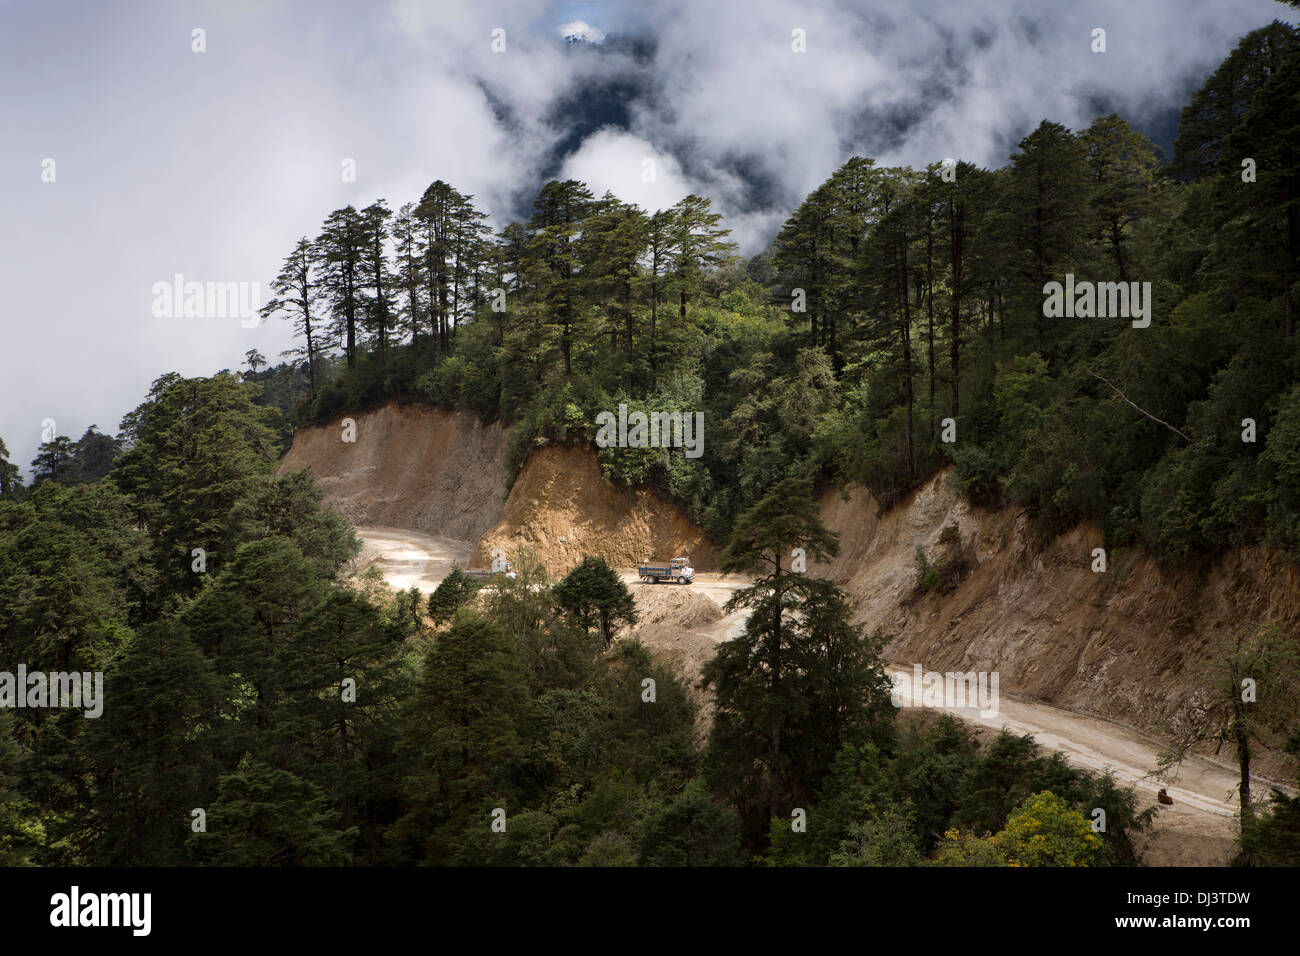 Bhutan, Dochu La pass, trucks on high altitude roads as cloud closes in Stock Photo